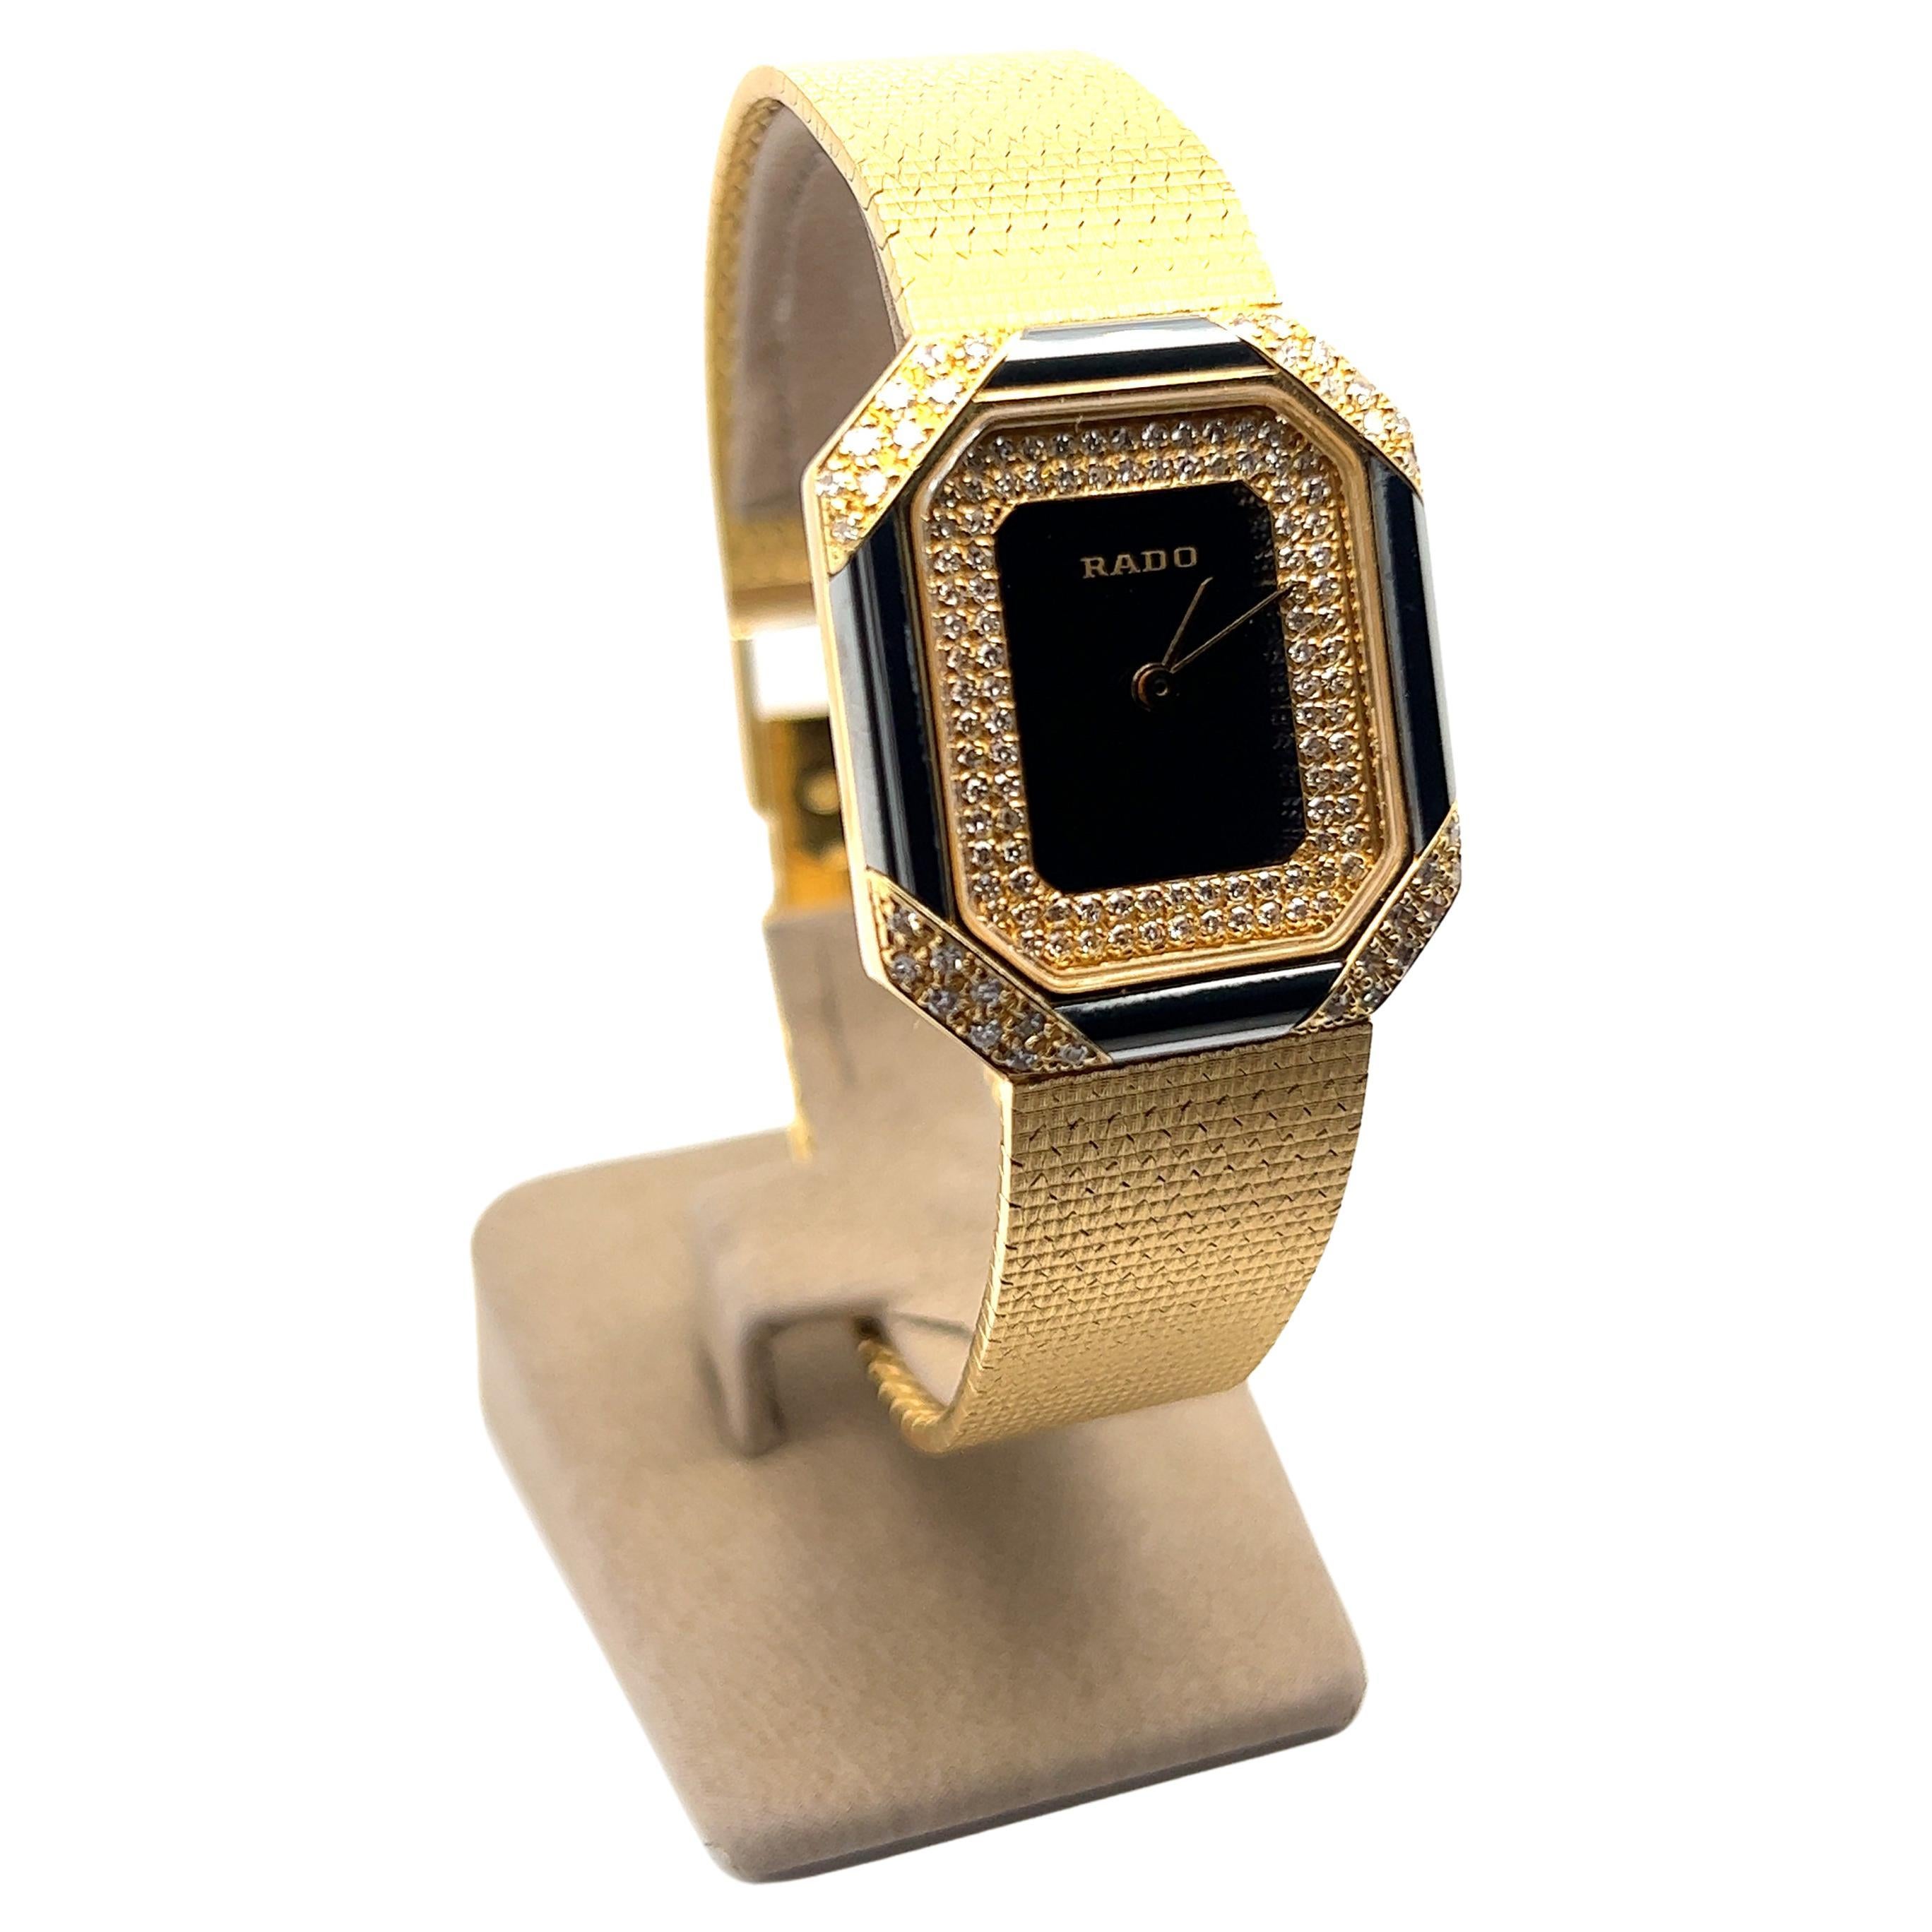 Contemporary Elegant Rado Lady’s Watch in 18 Karat Yellow Gold